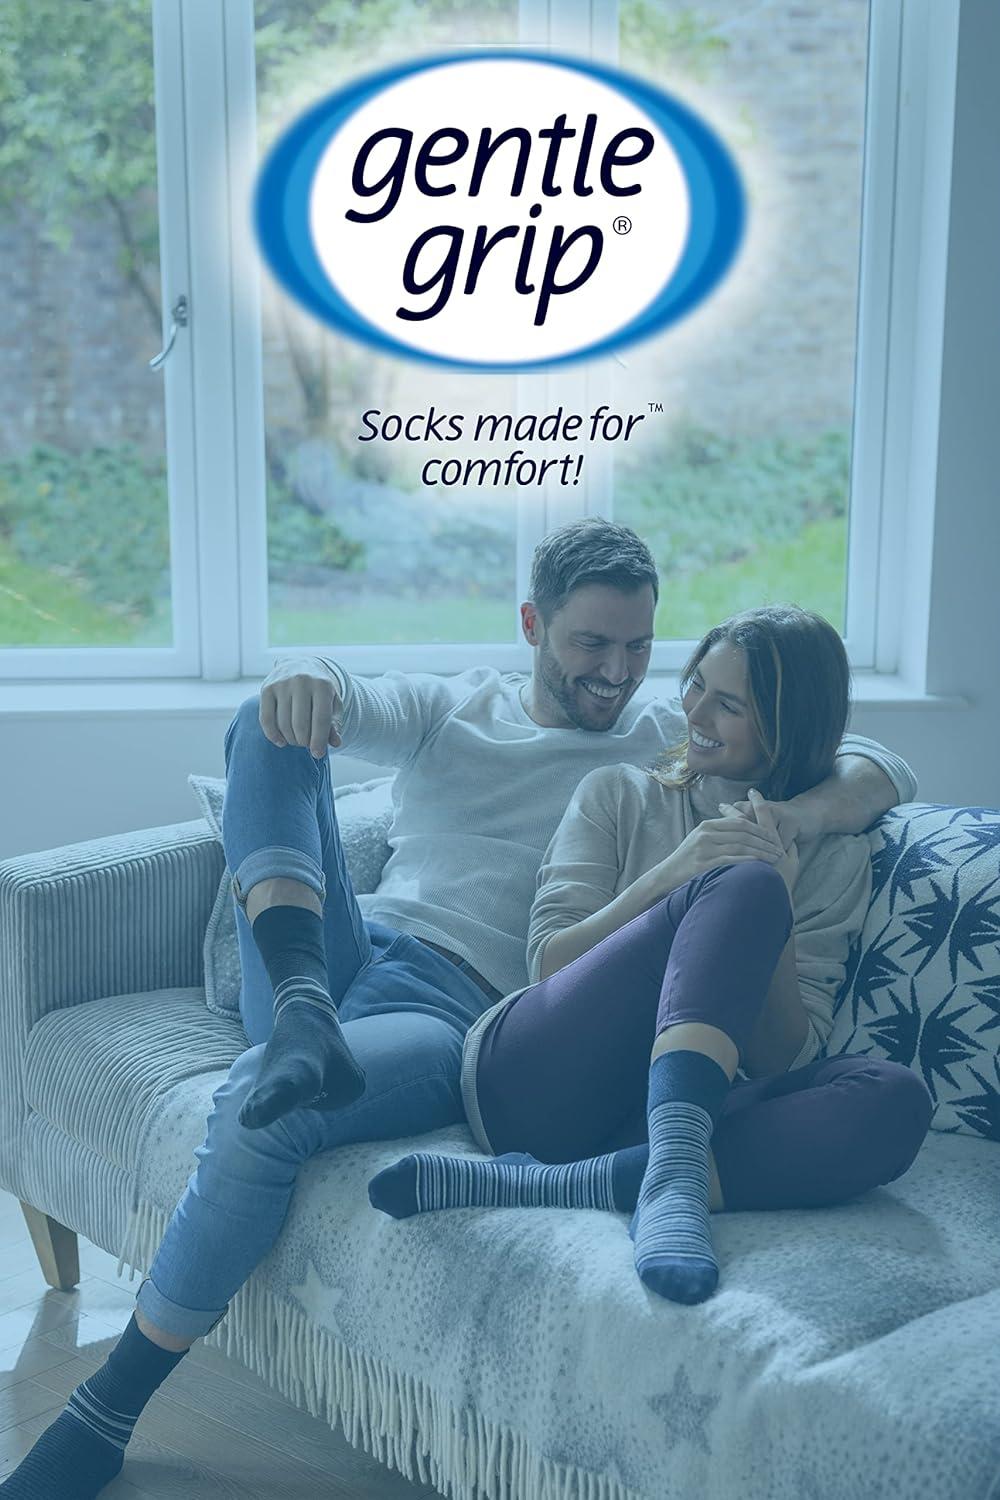 12 Pairs Mens Non-Elastic Cotton Diabetic Socks SIZE 6-11 Loose Top Gentle  Grip